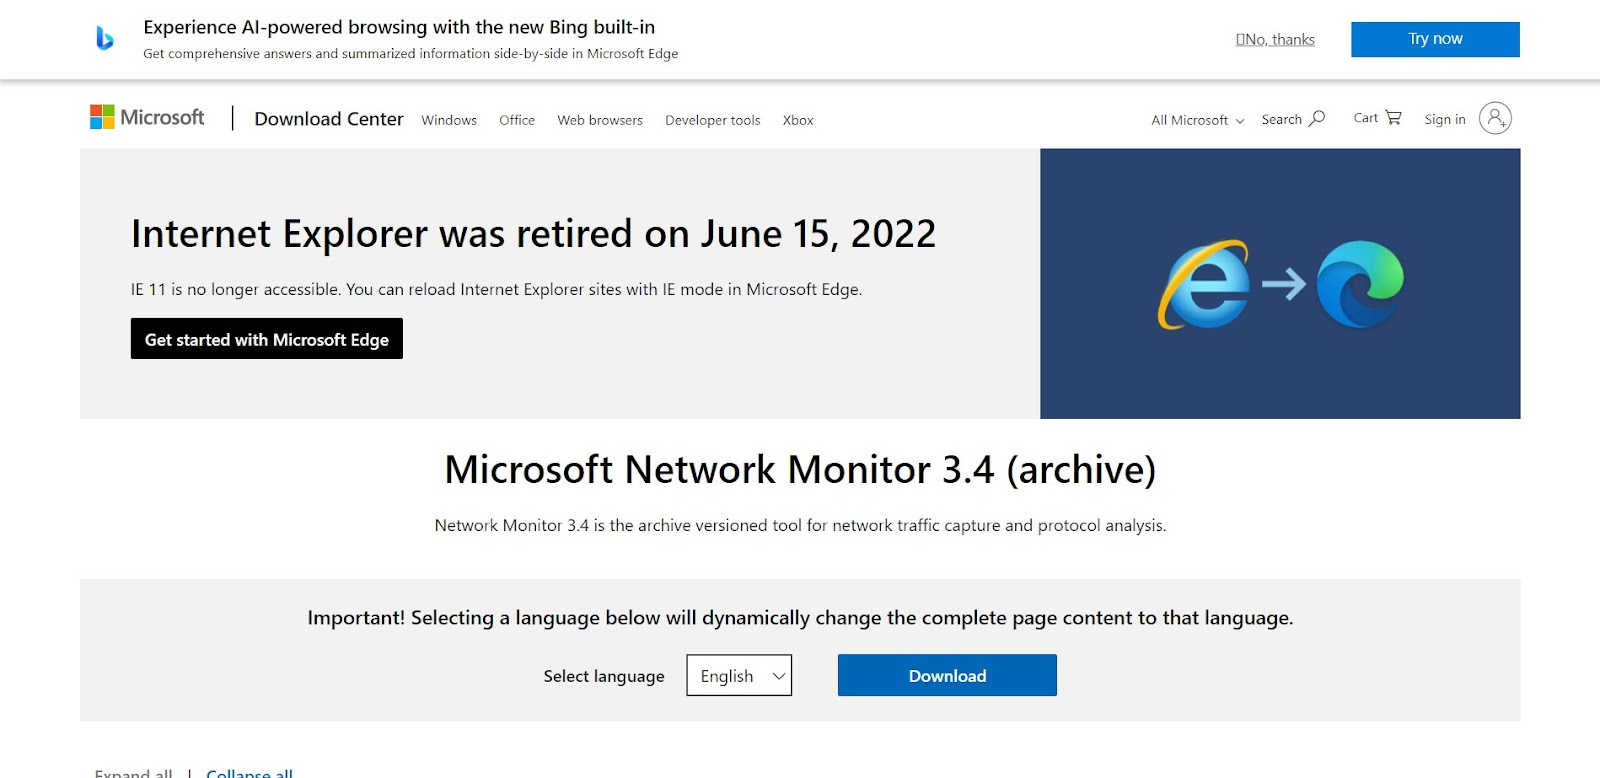 A screenshot of Microsoft's website